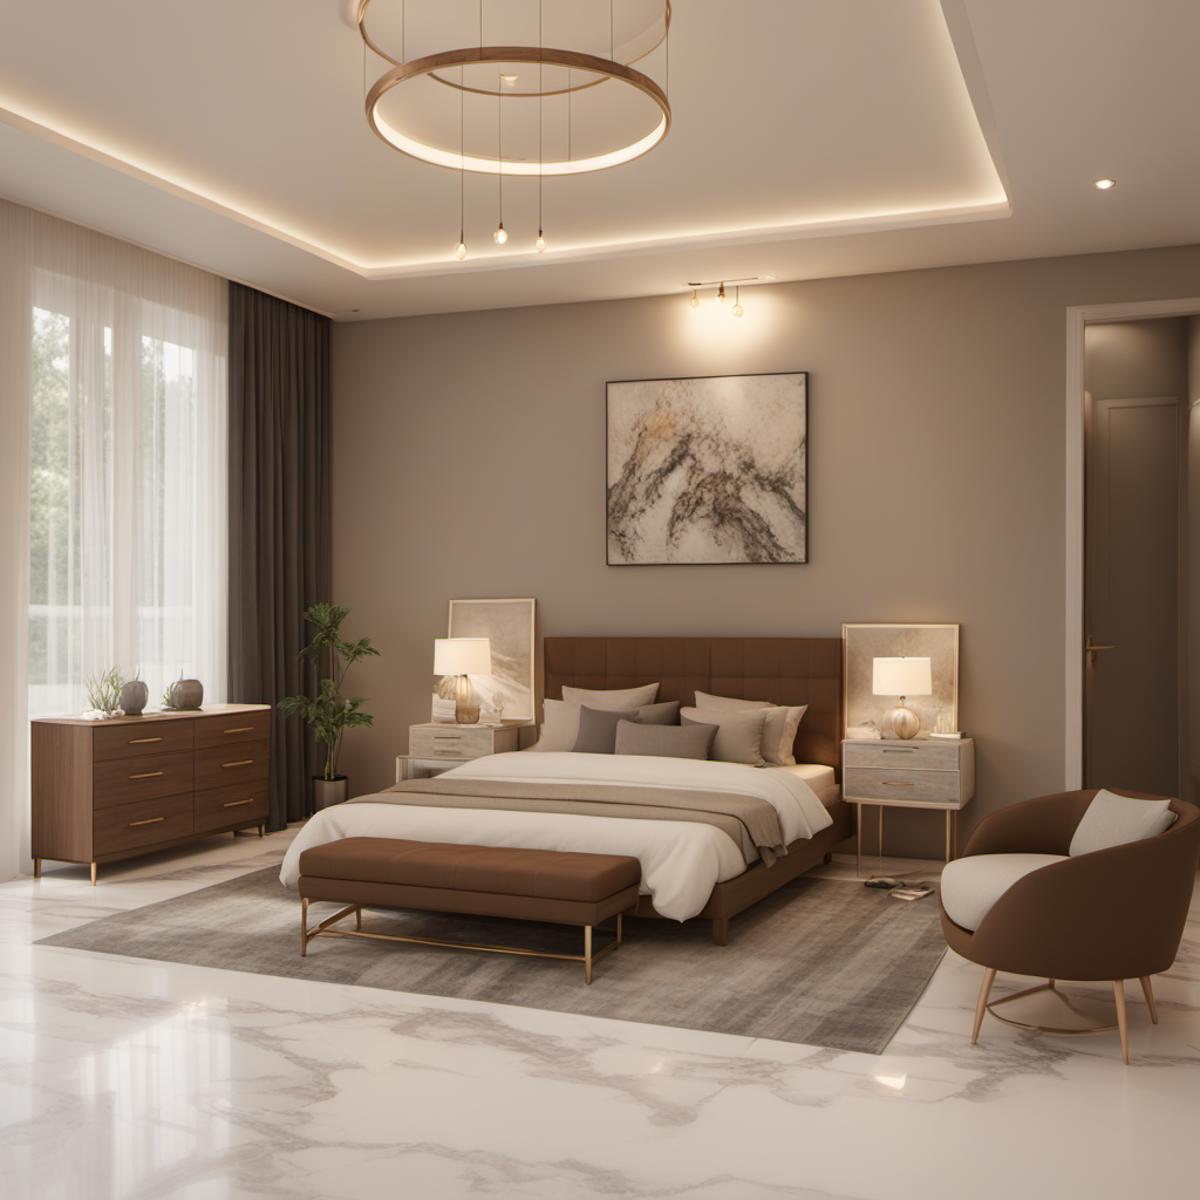 UE5 interior design image by melechesh666990978